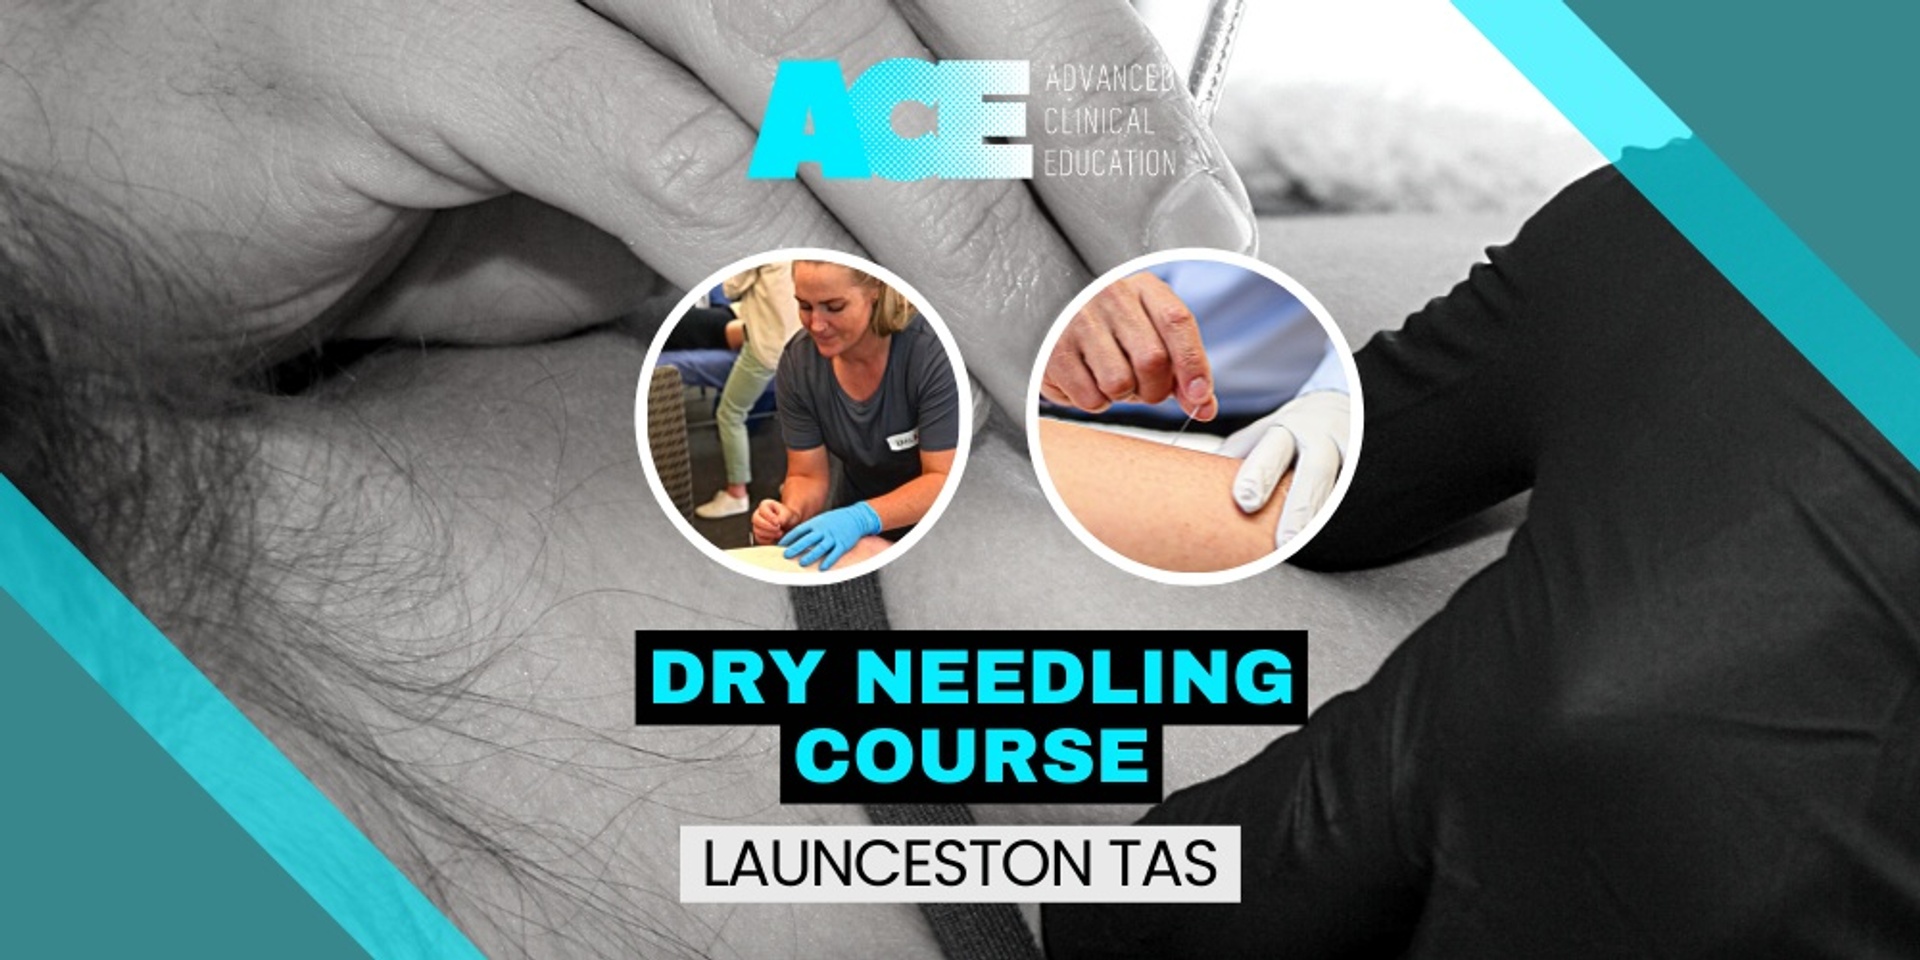 Dry Needling Course (Launceston TAS)